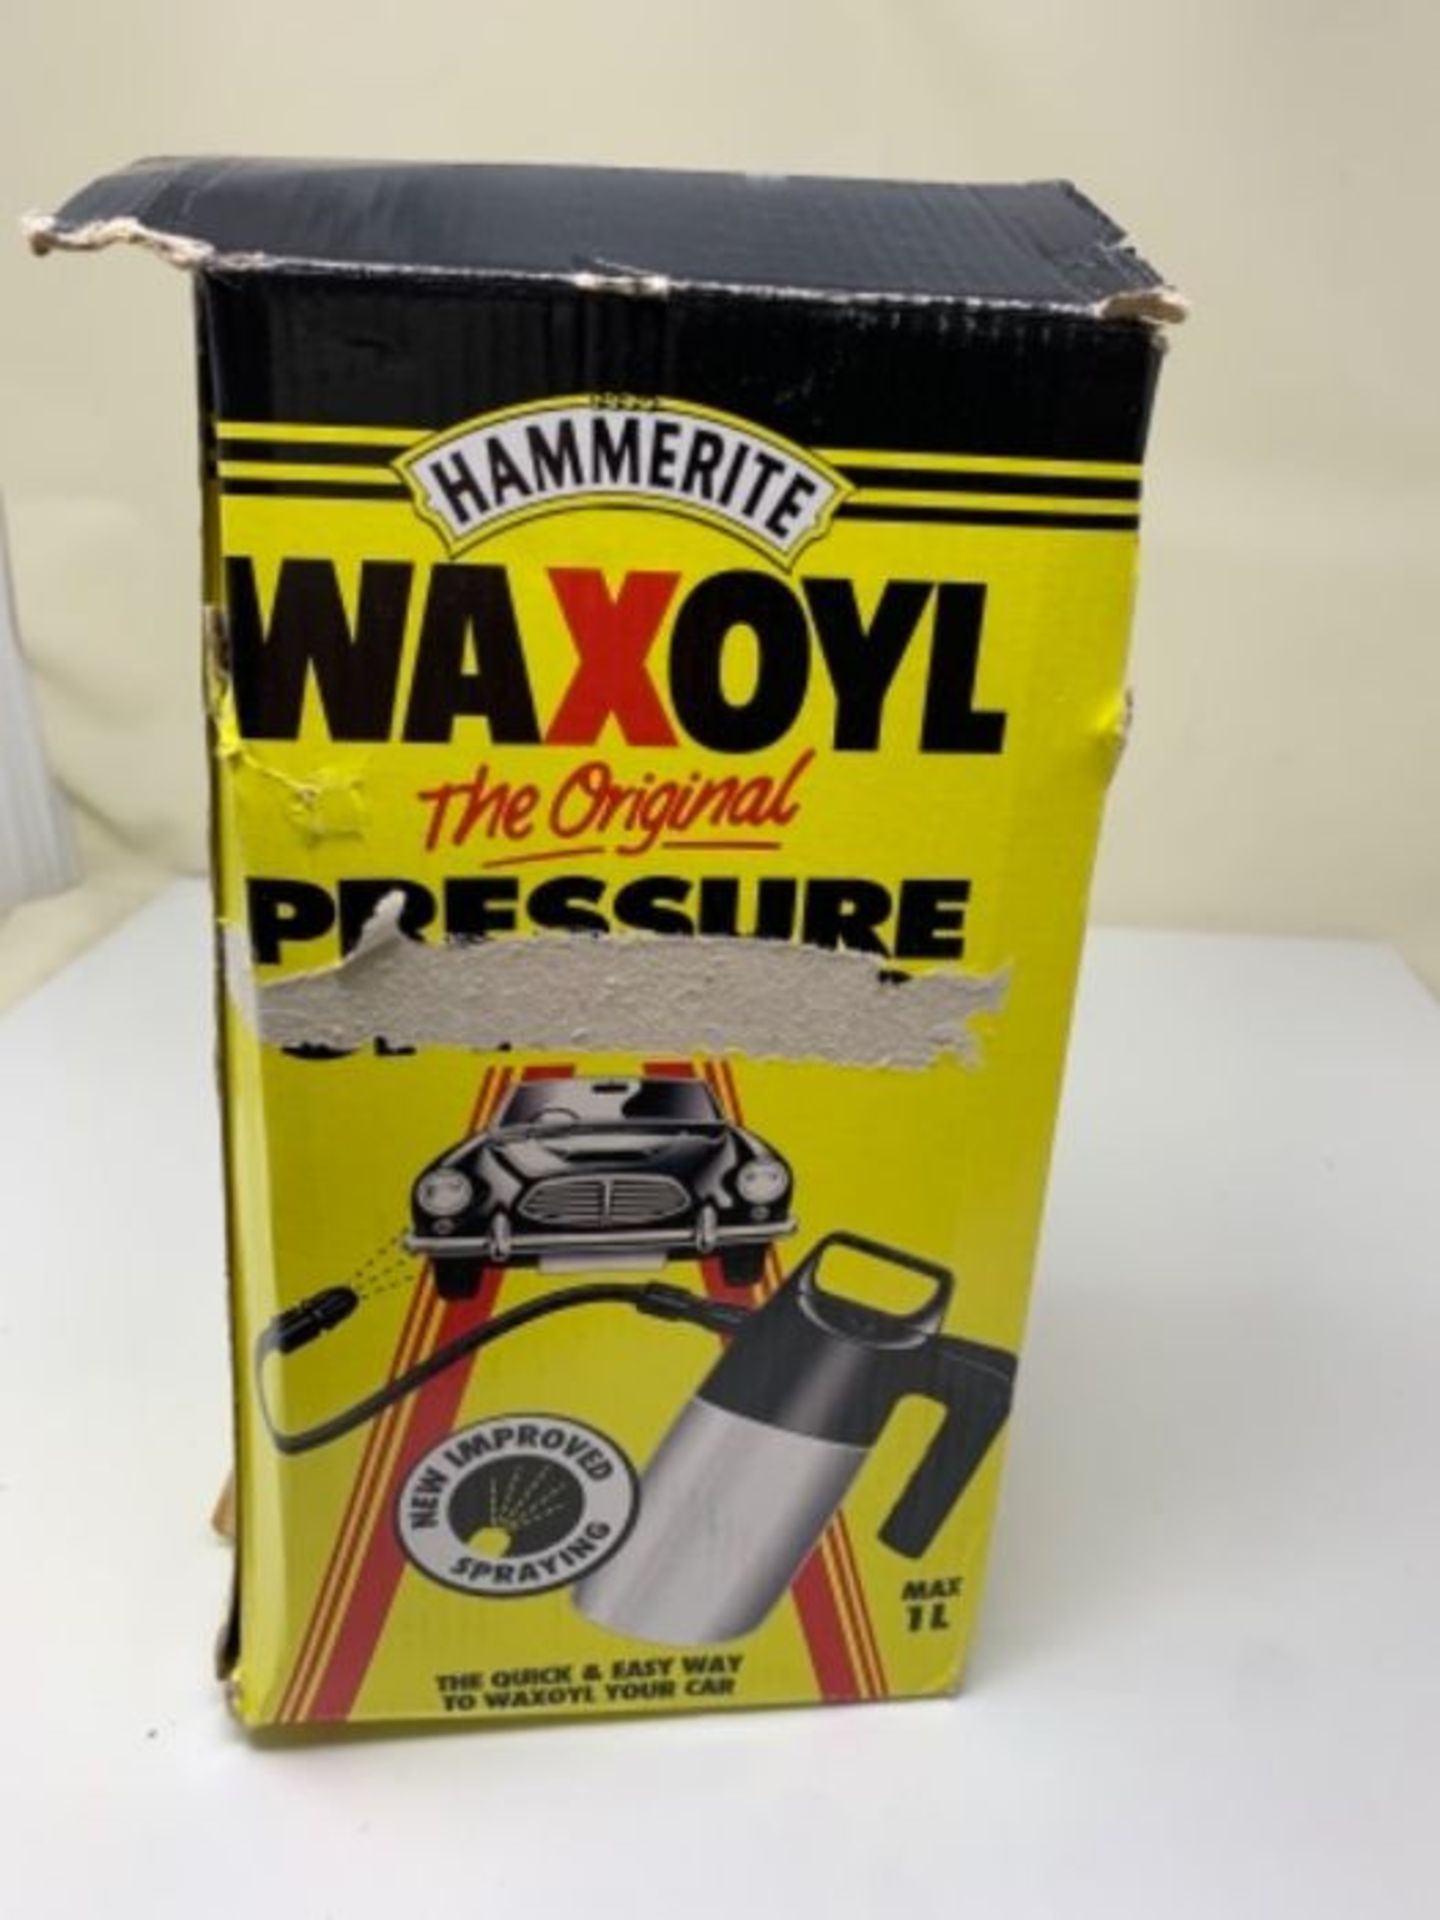 Waxoyl 6141711 High Pressure Sprayer - white/black - Image 2 of 3